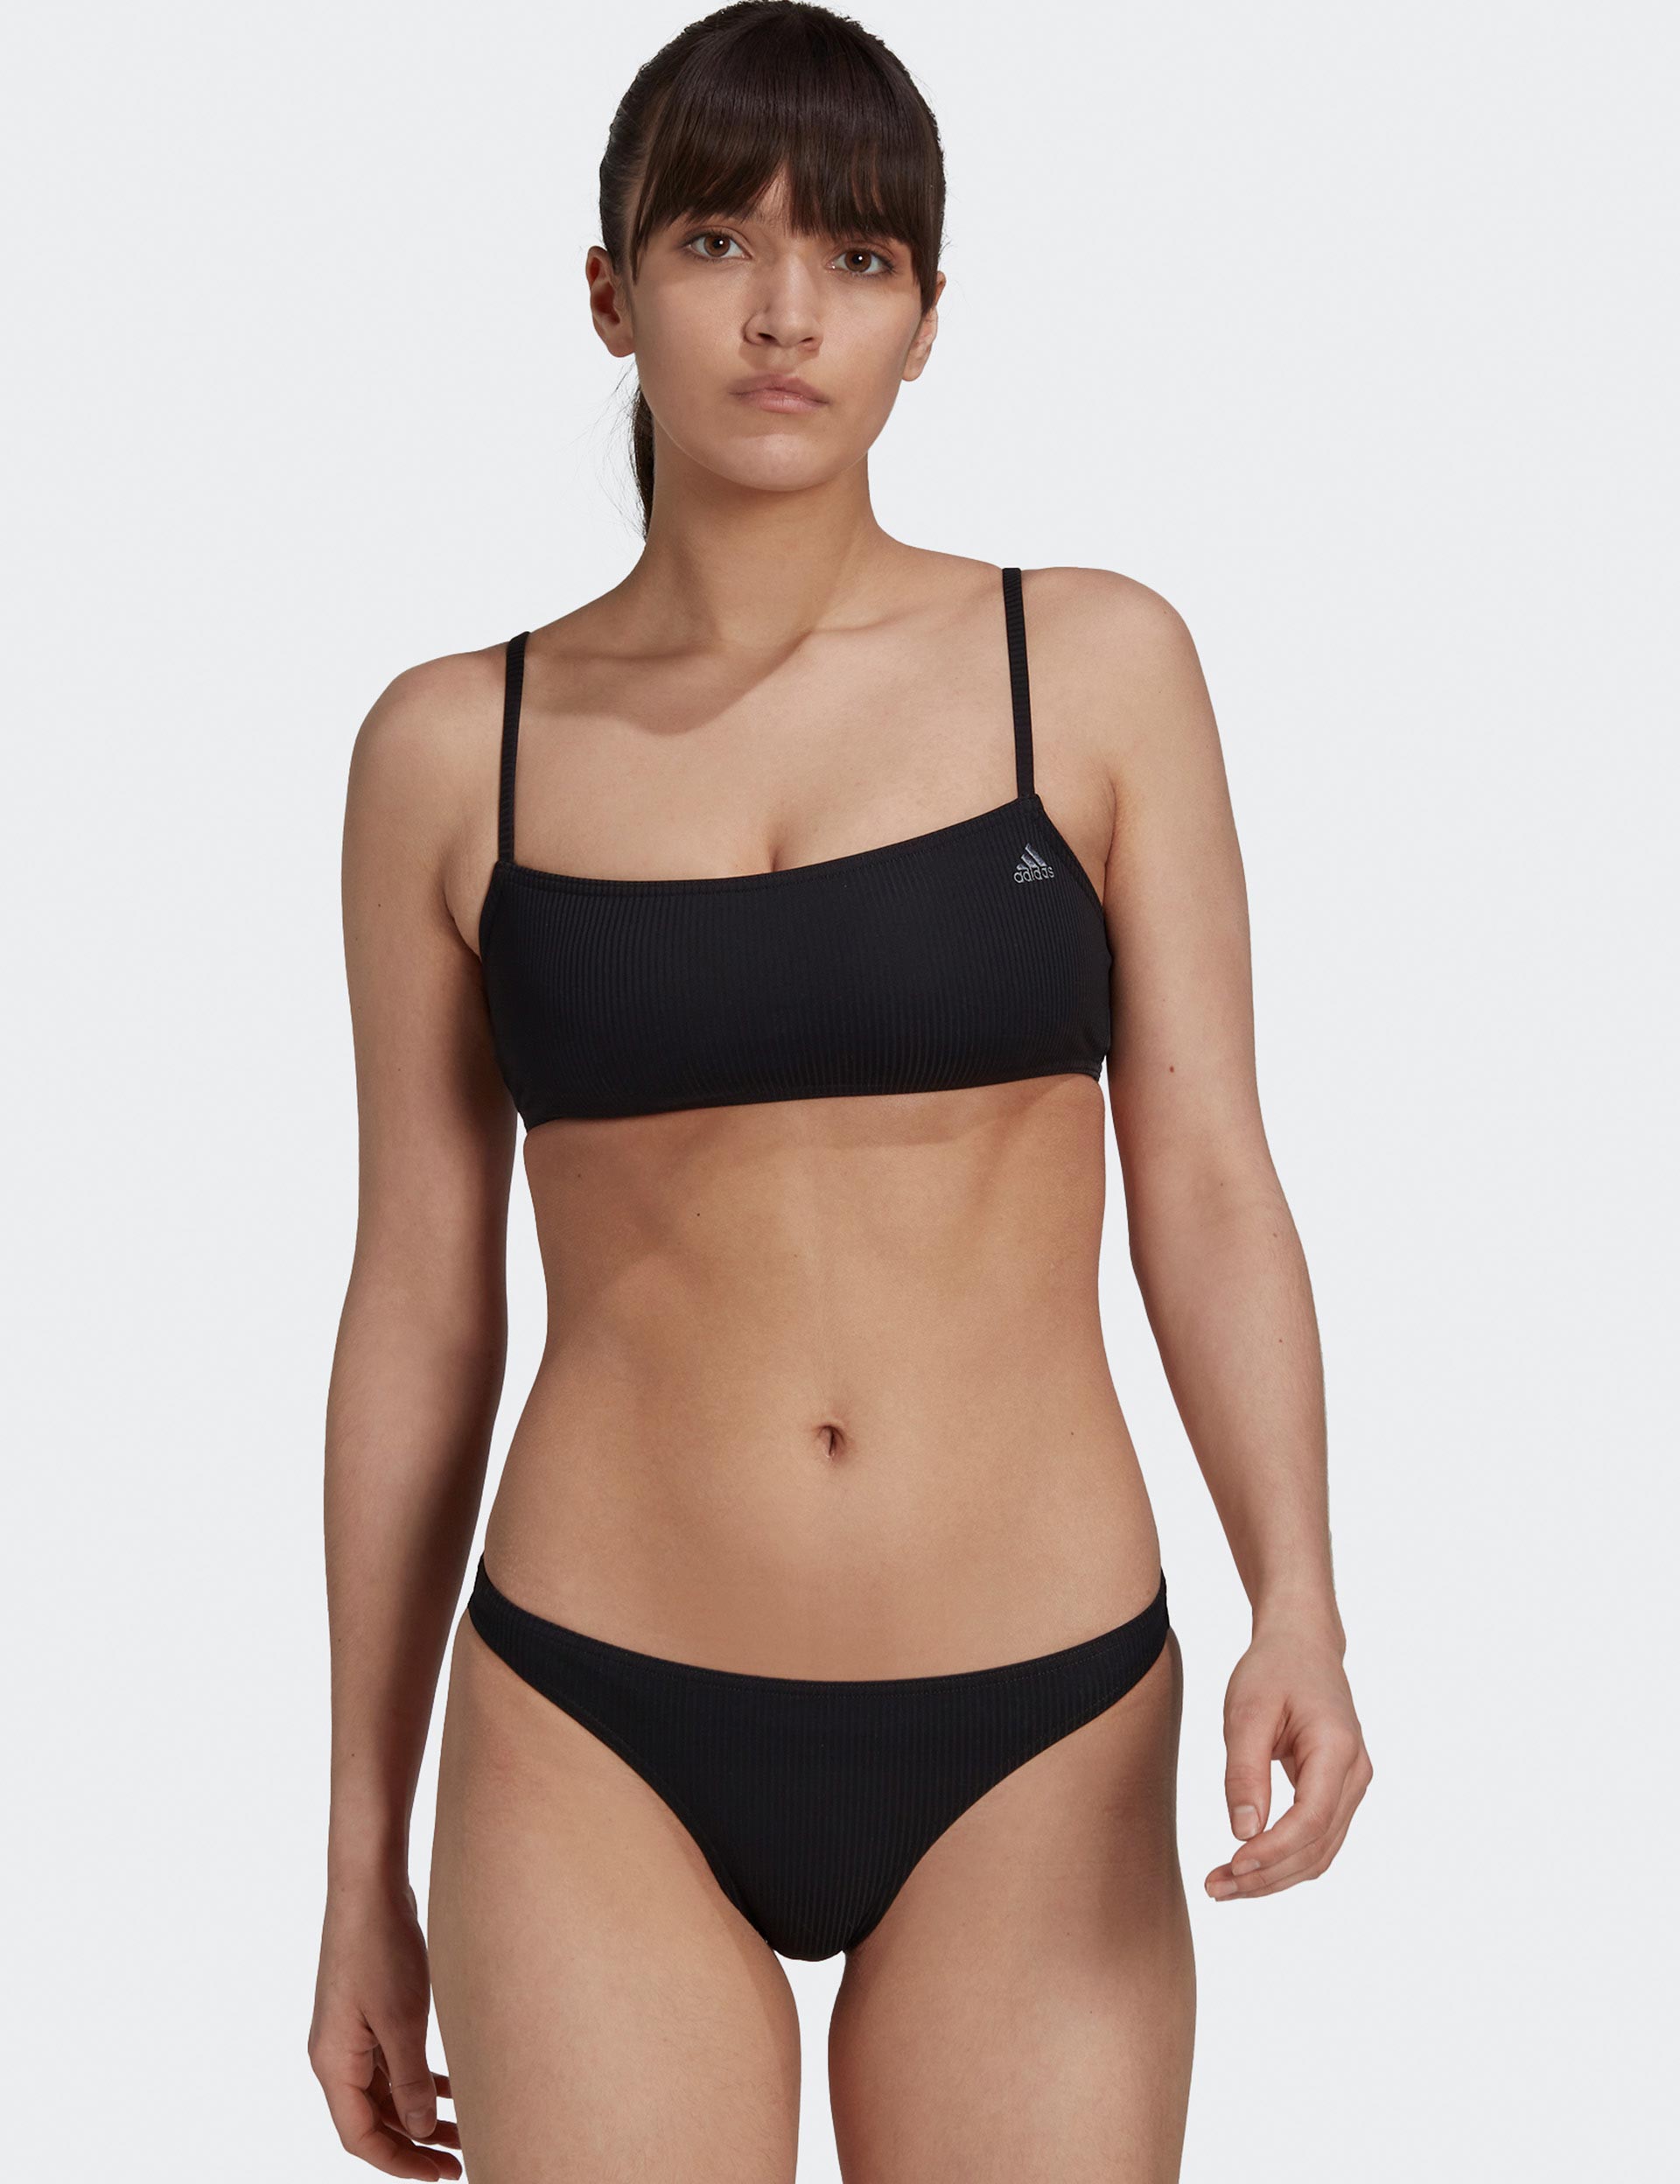 Adidas Iconisea Bikini Set - Blackimage1- The Sports Edit